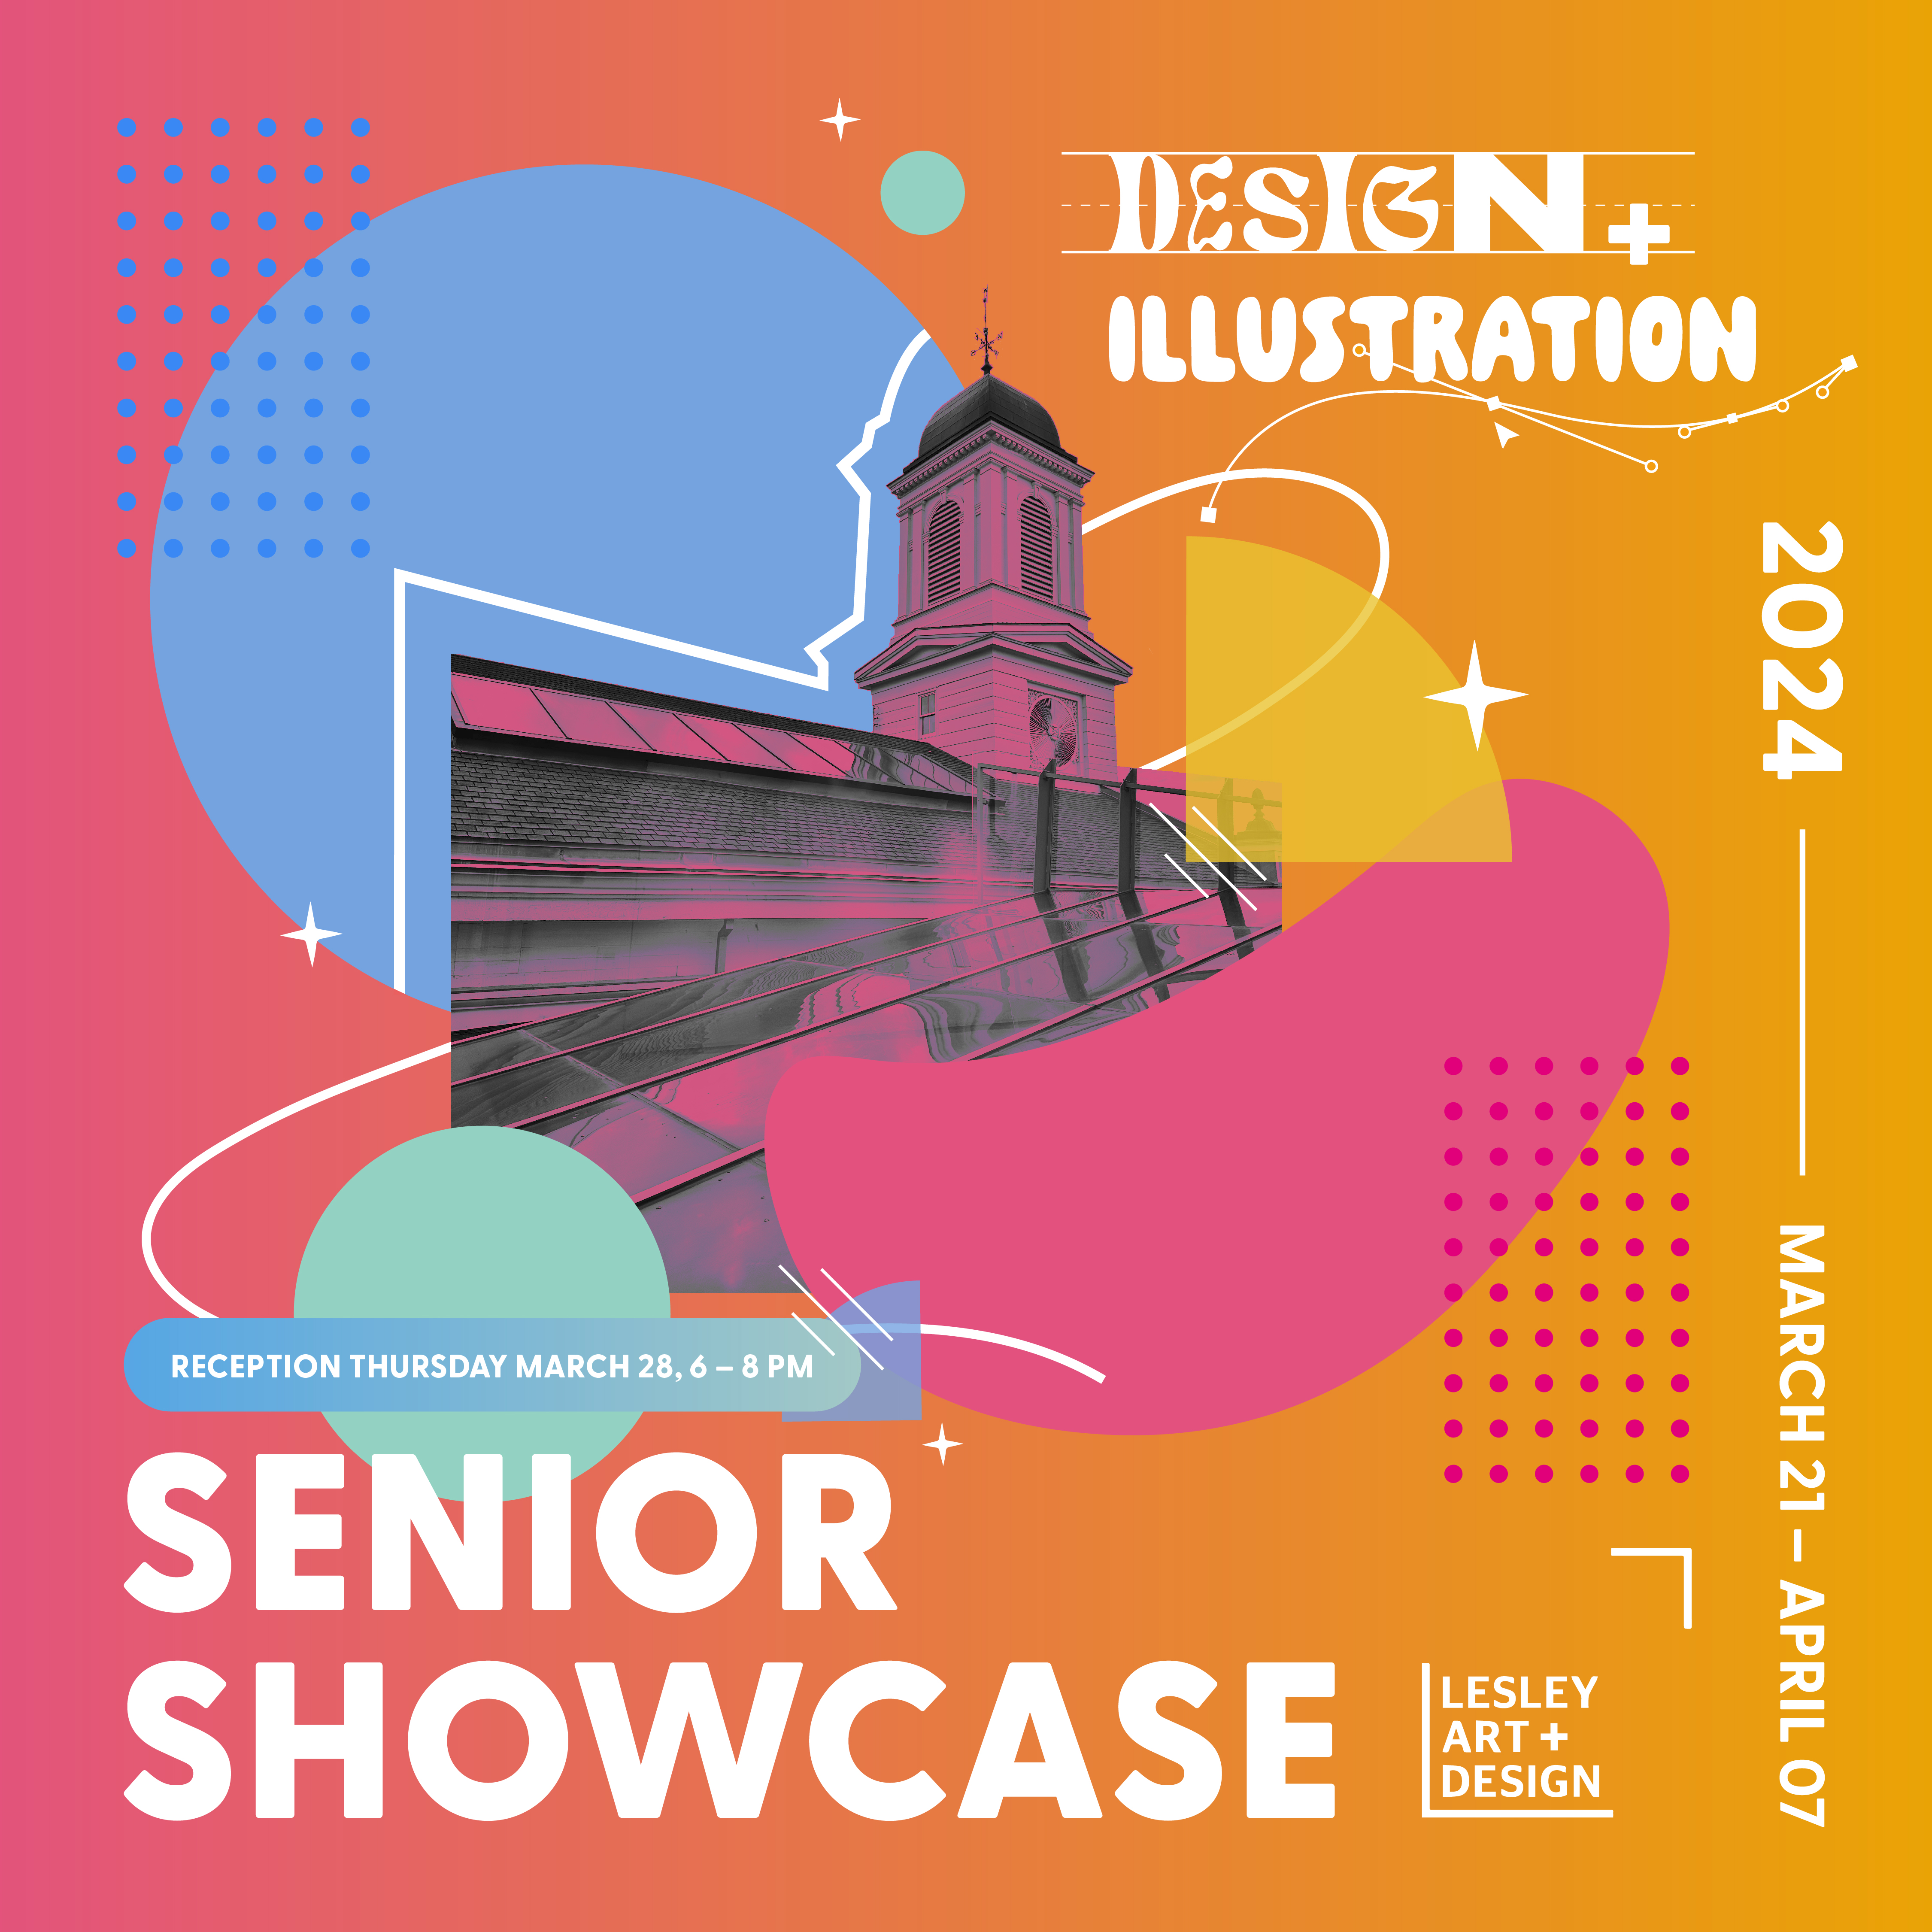 Illustration and Design Senior Showcase poster